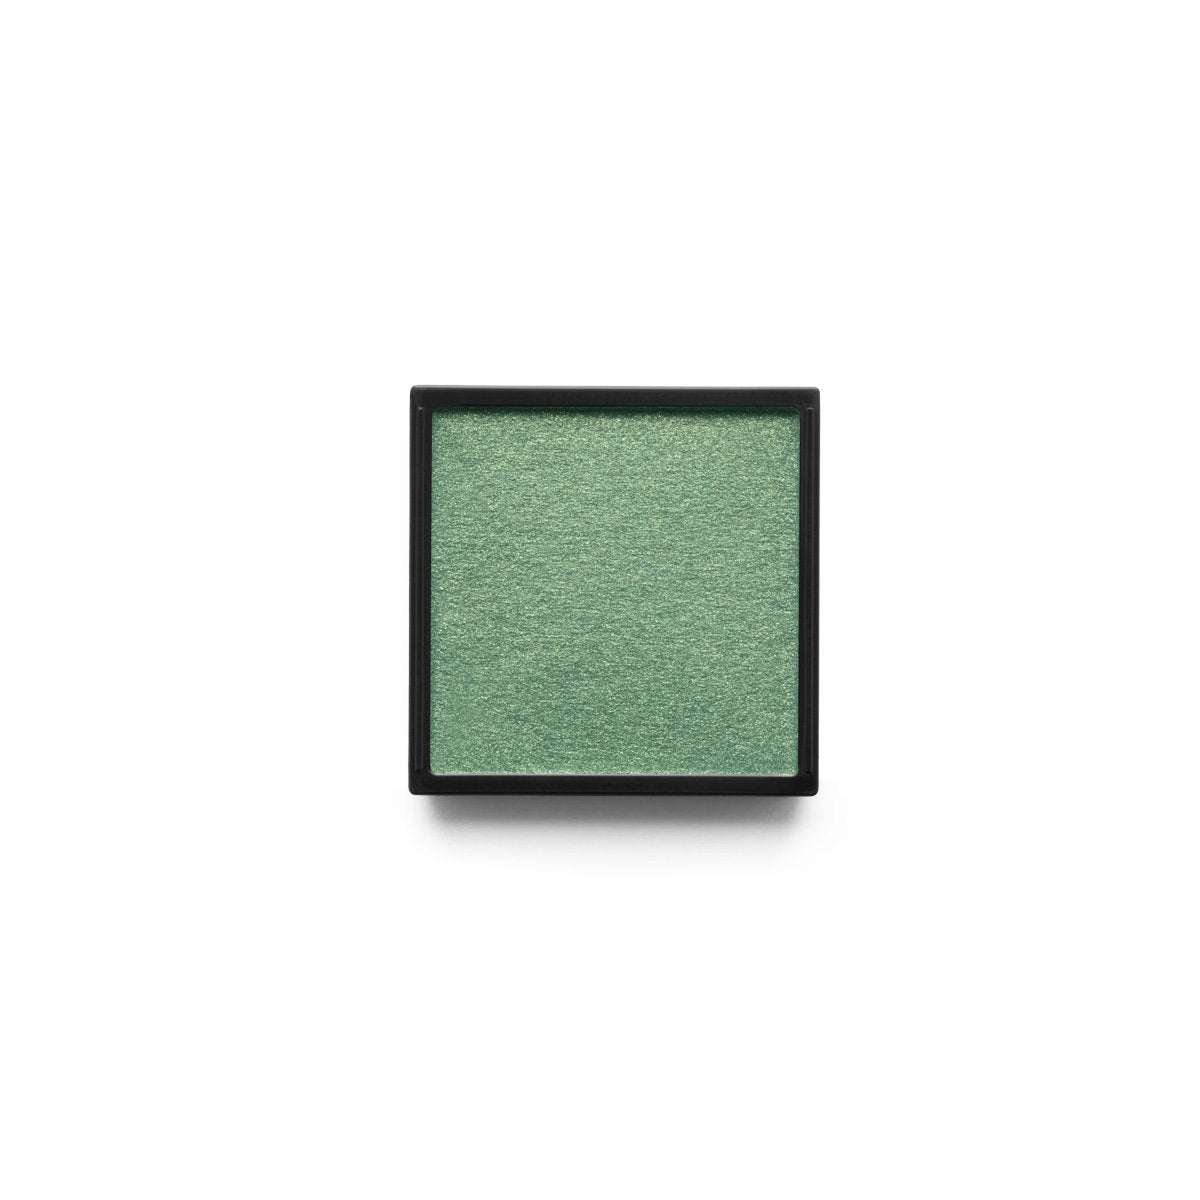 ENVIER - KHAKI GREEN - satin finish eyeshadow in khaki green shade 